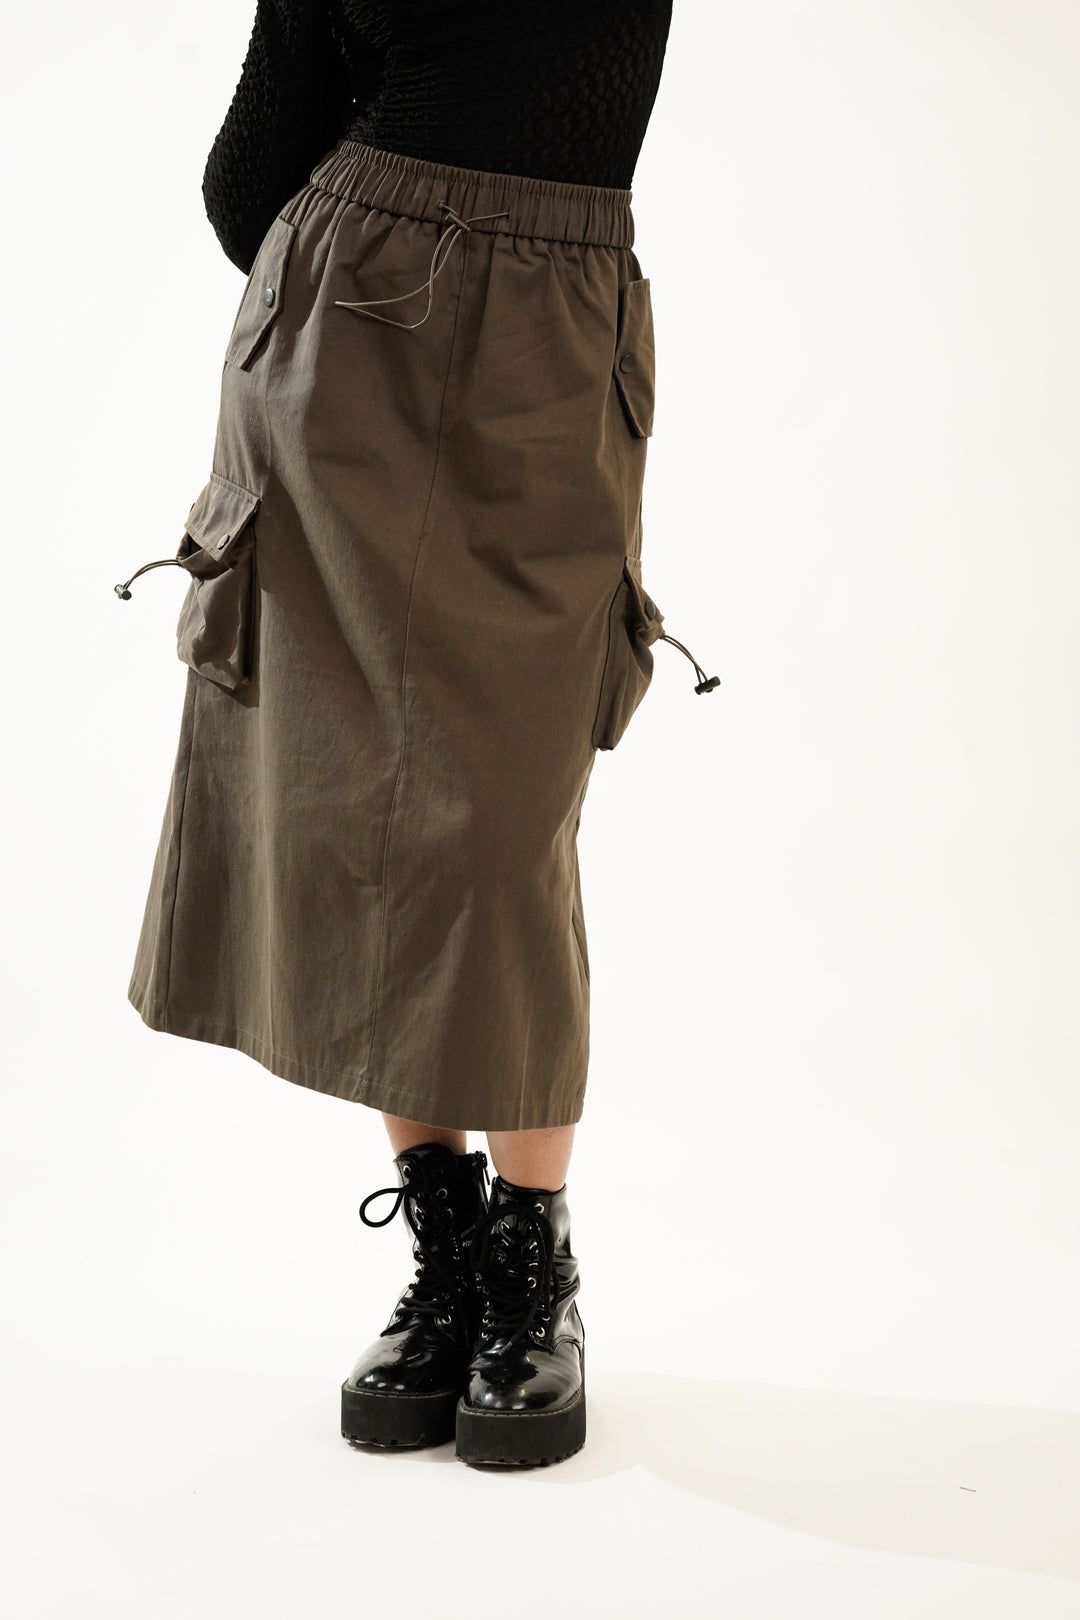 Twill fabric cargo skirt for streetwear